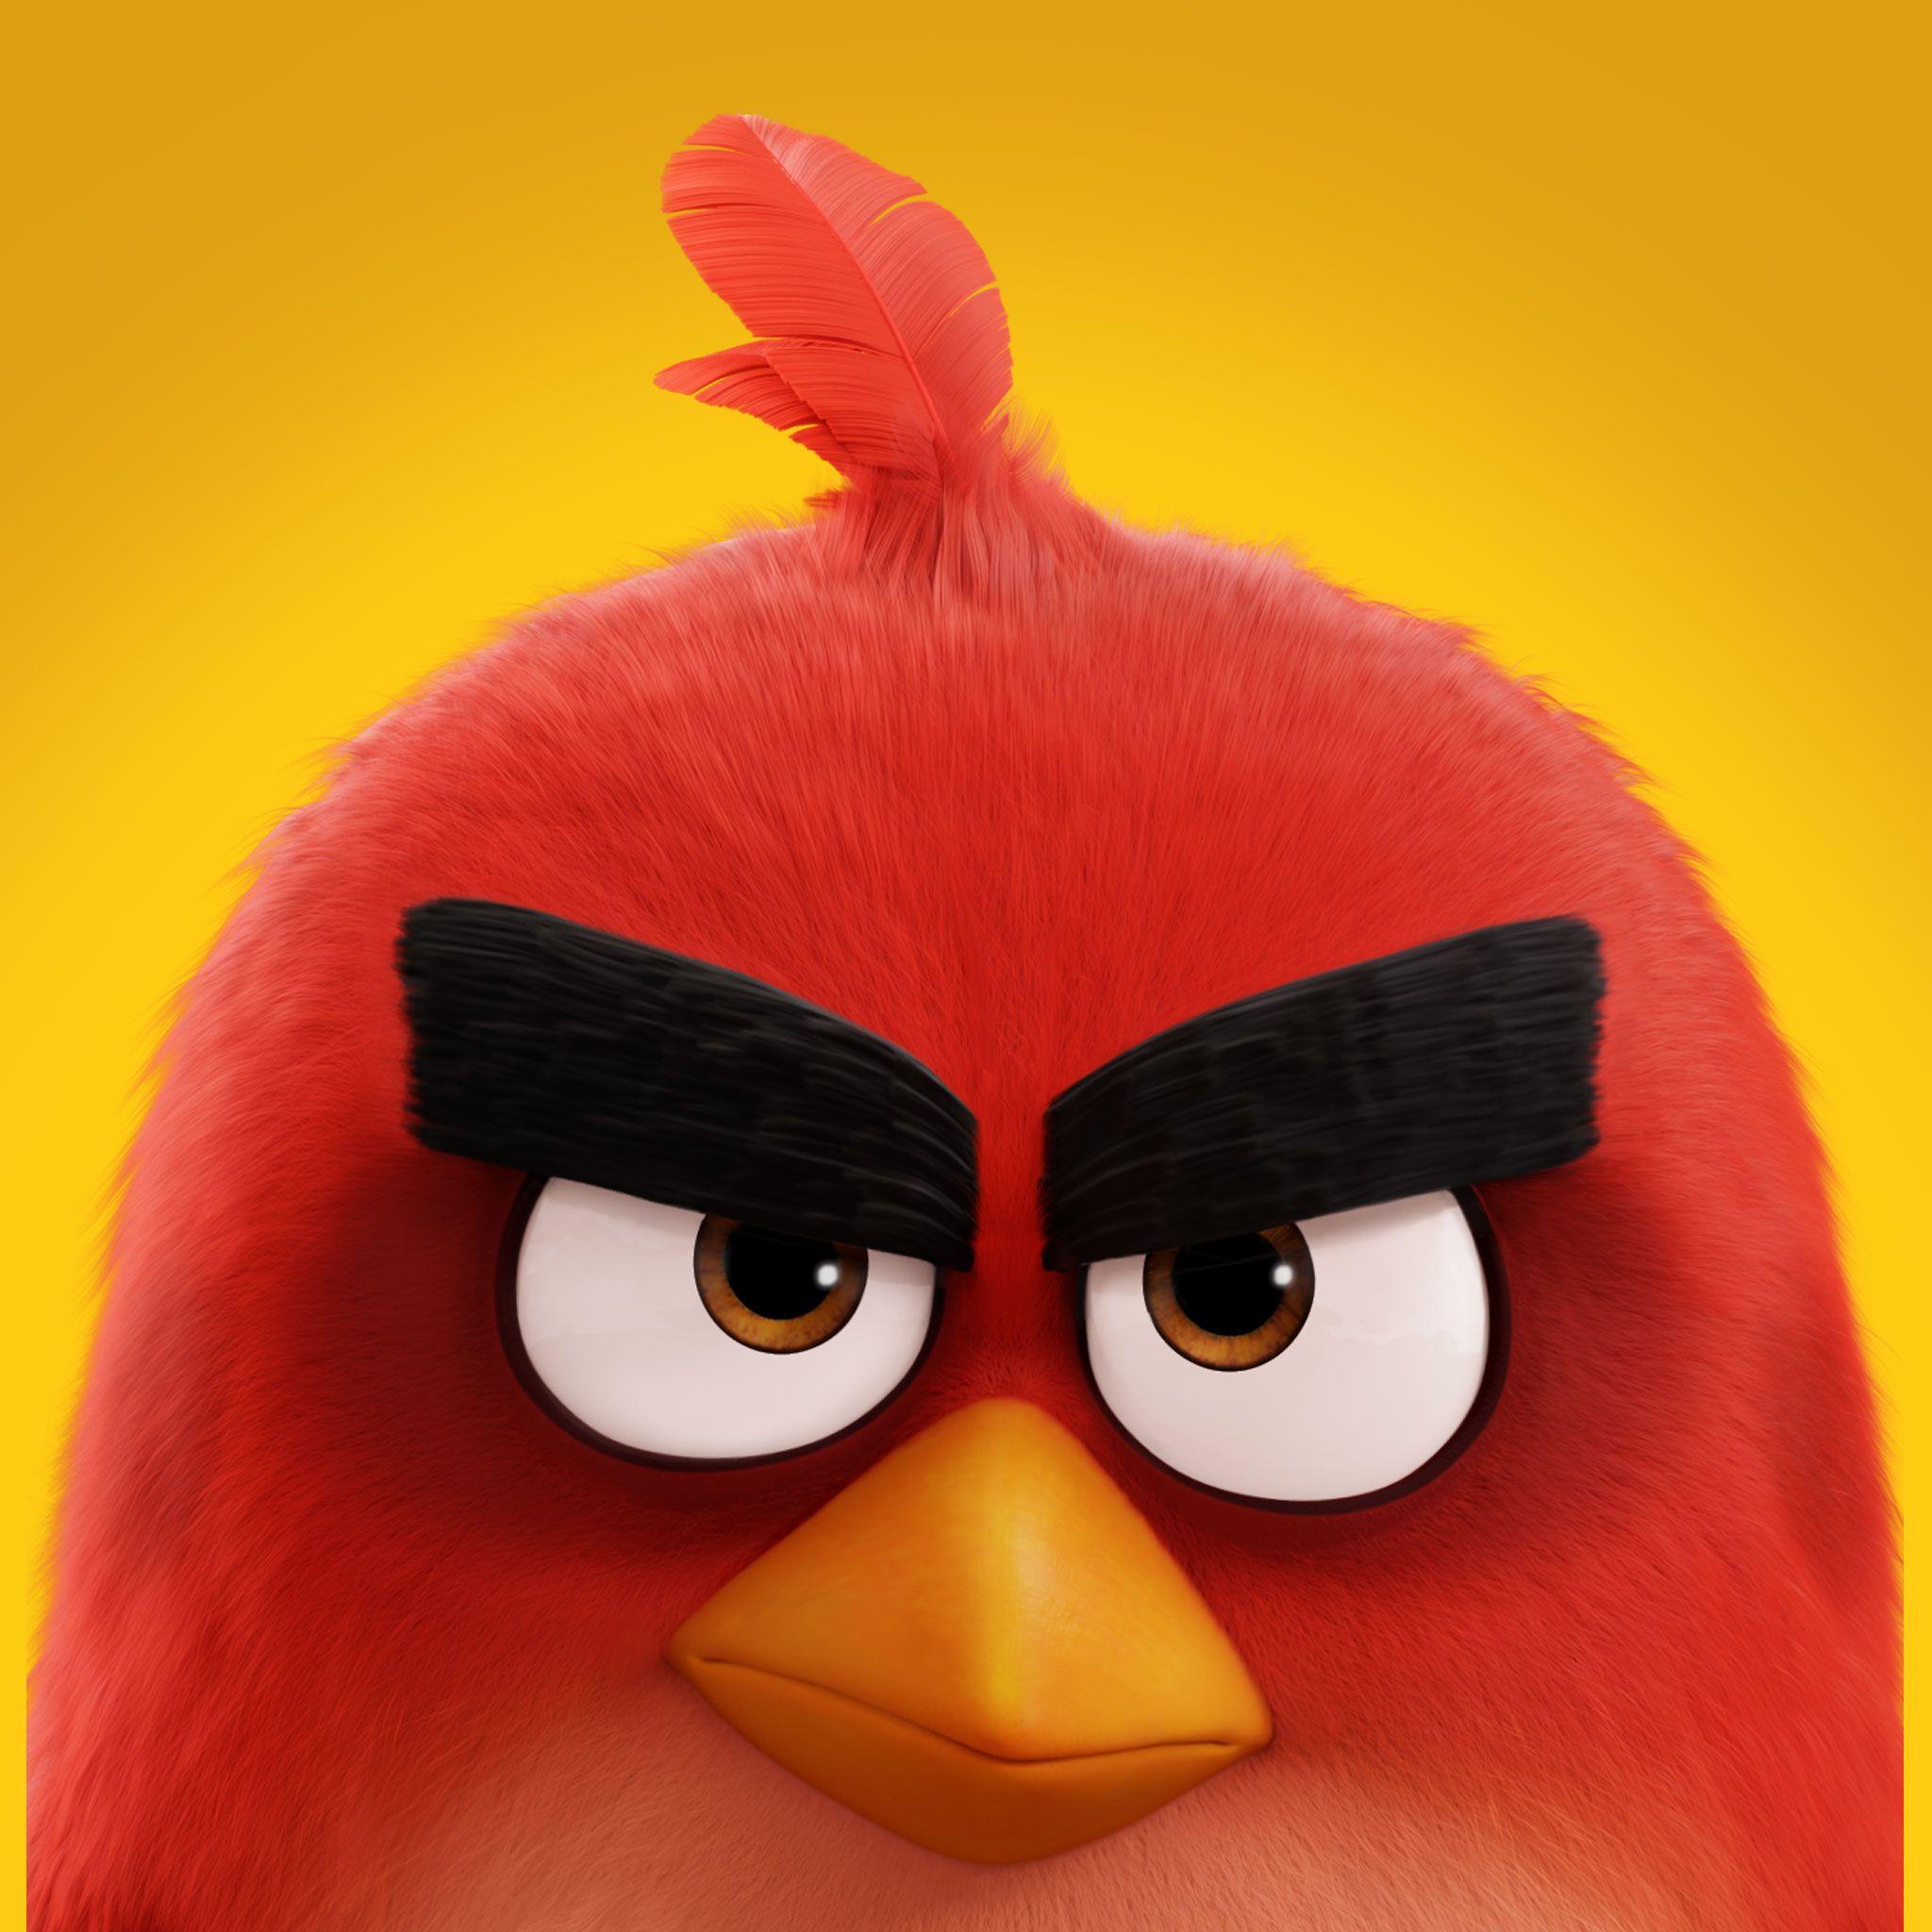 The Angry Birds Movie (2016) HD Desktop, iPhone & iPad Wallpaper